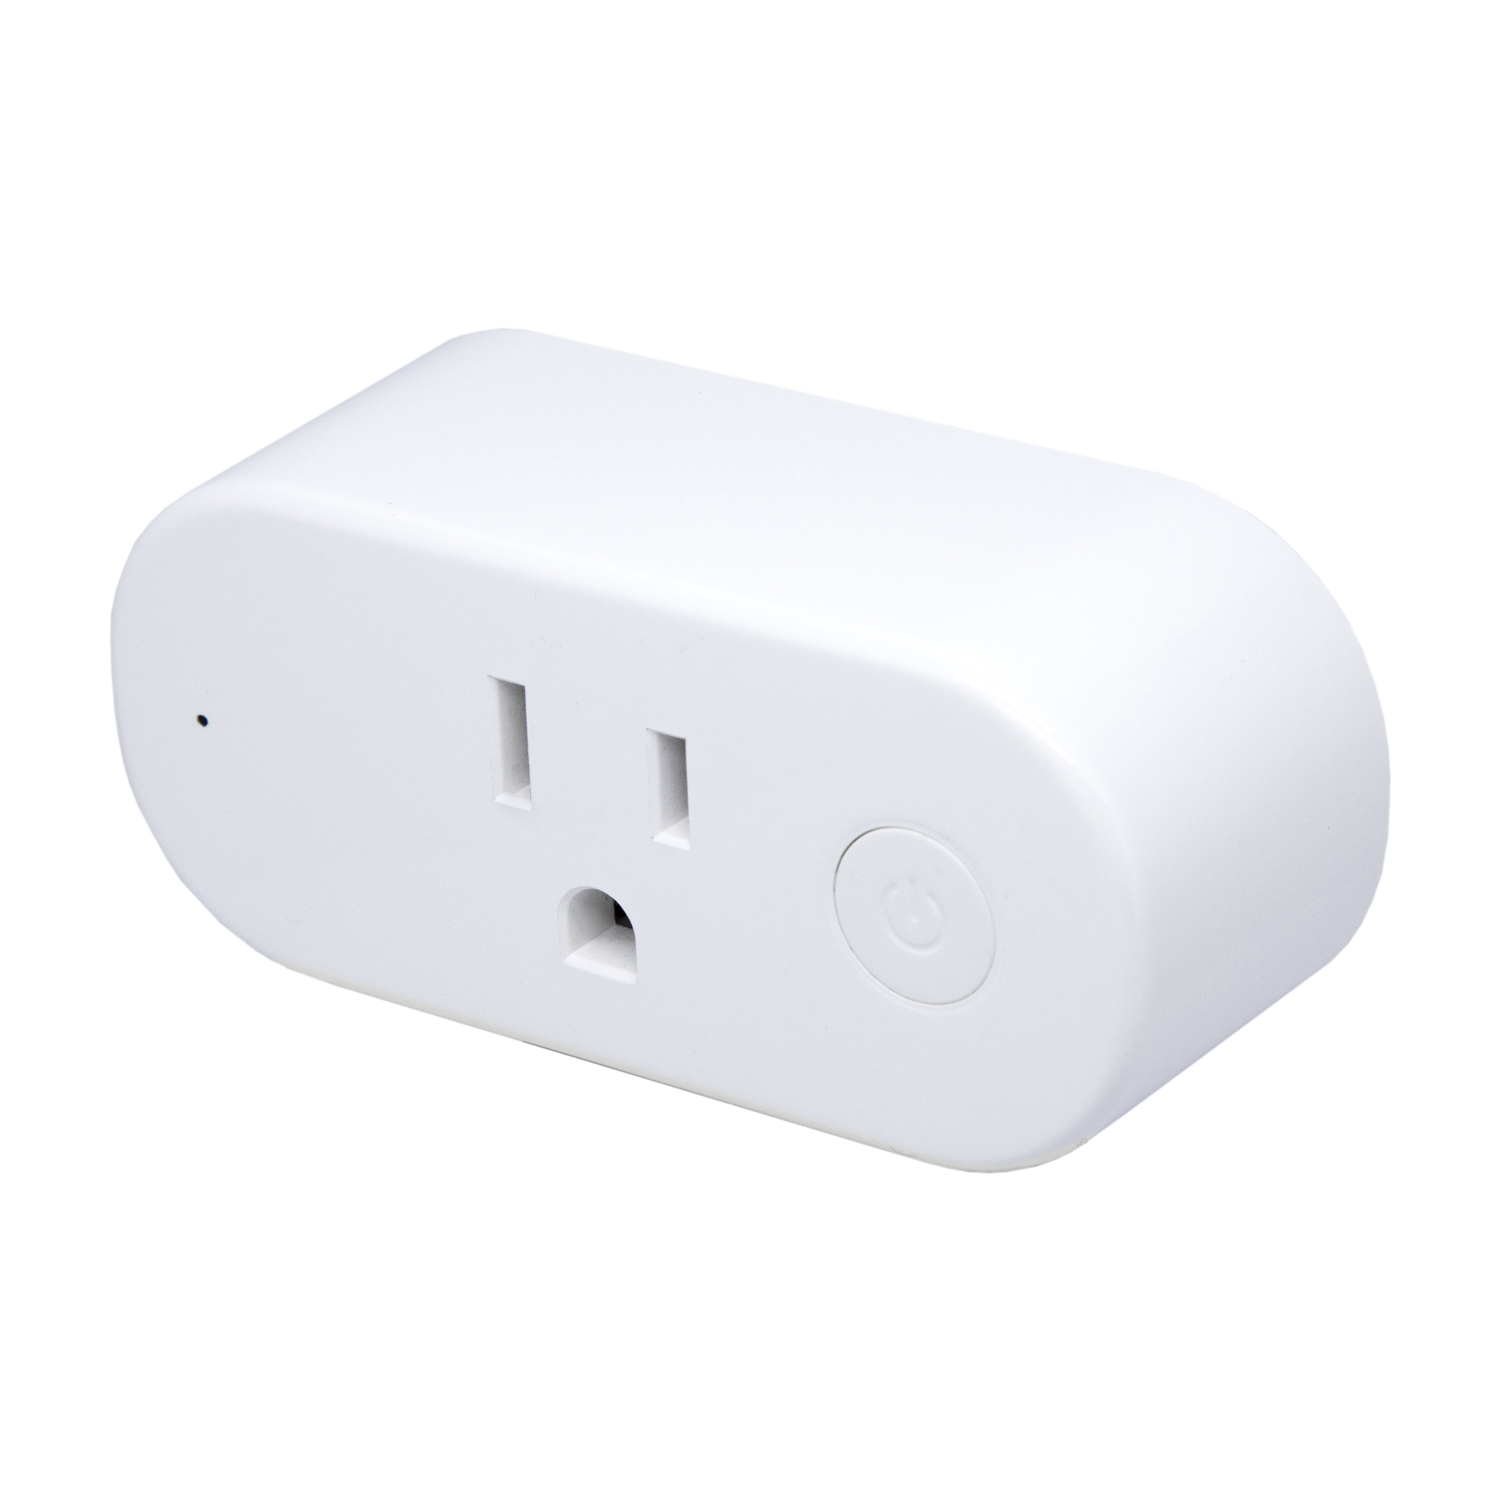 Shelly Plug Smart WiFi socket compatible with  Alexa, Google Home